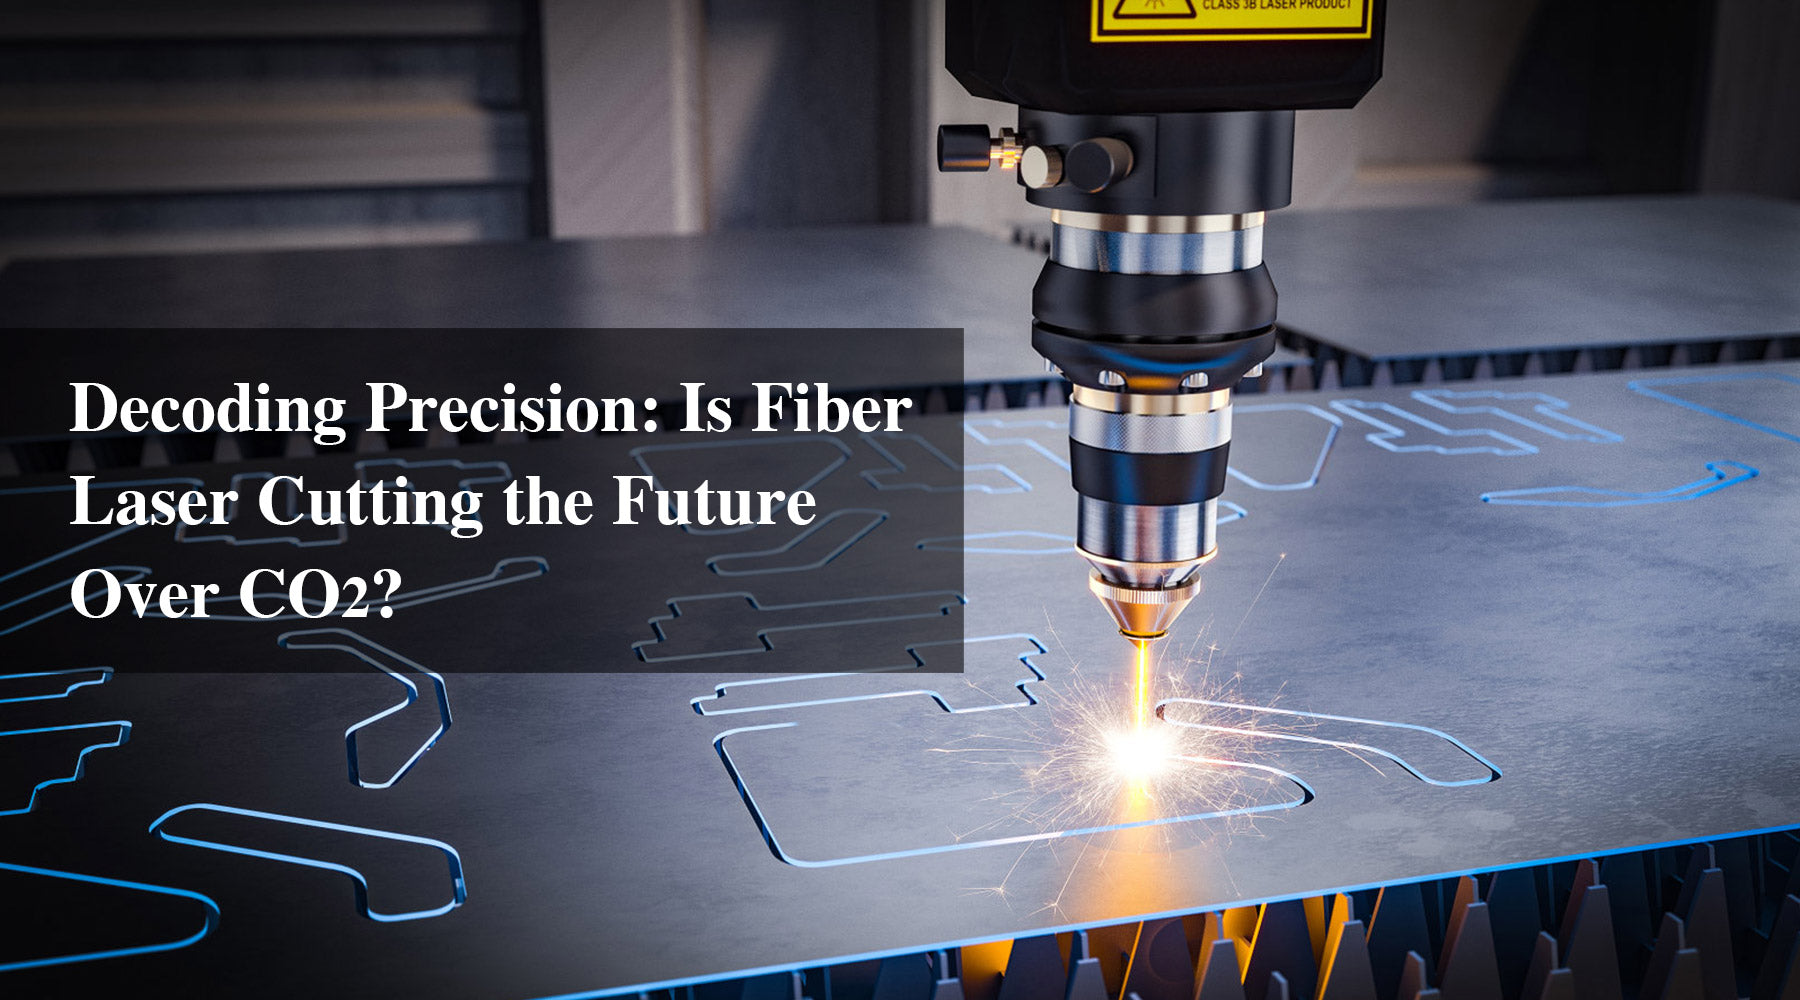 Decoding Precision: Is Fiber Laser Cutting the Future Over CO2?